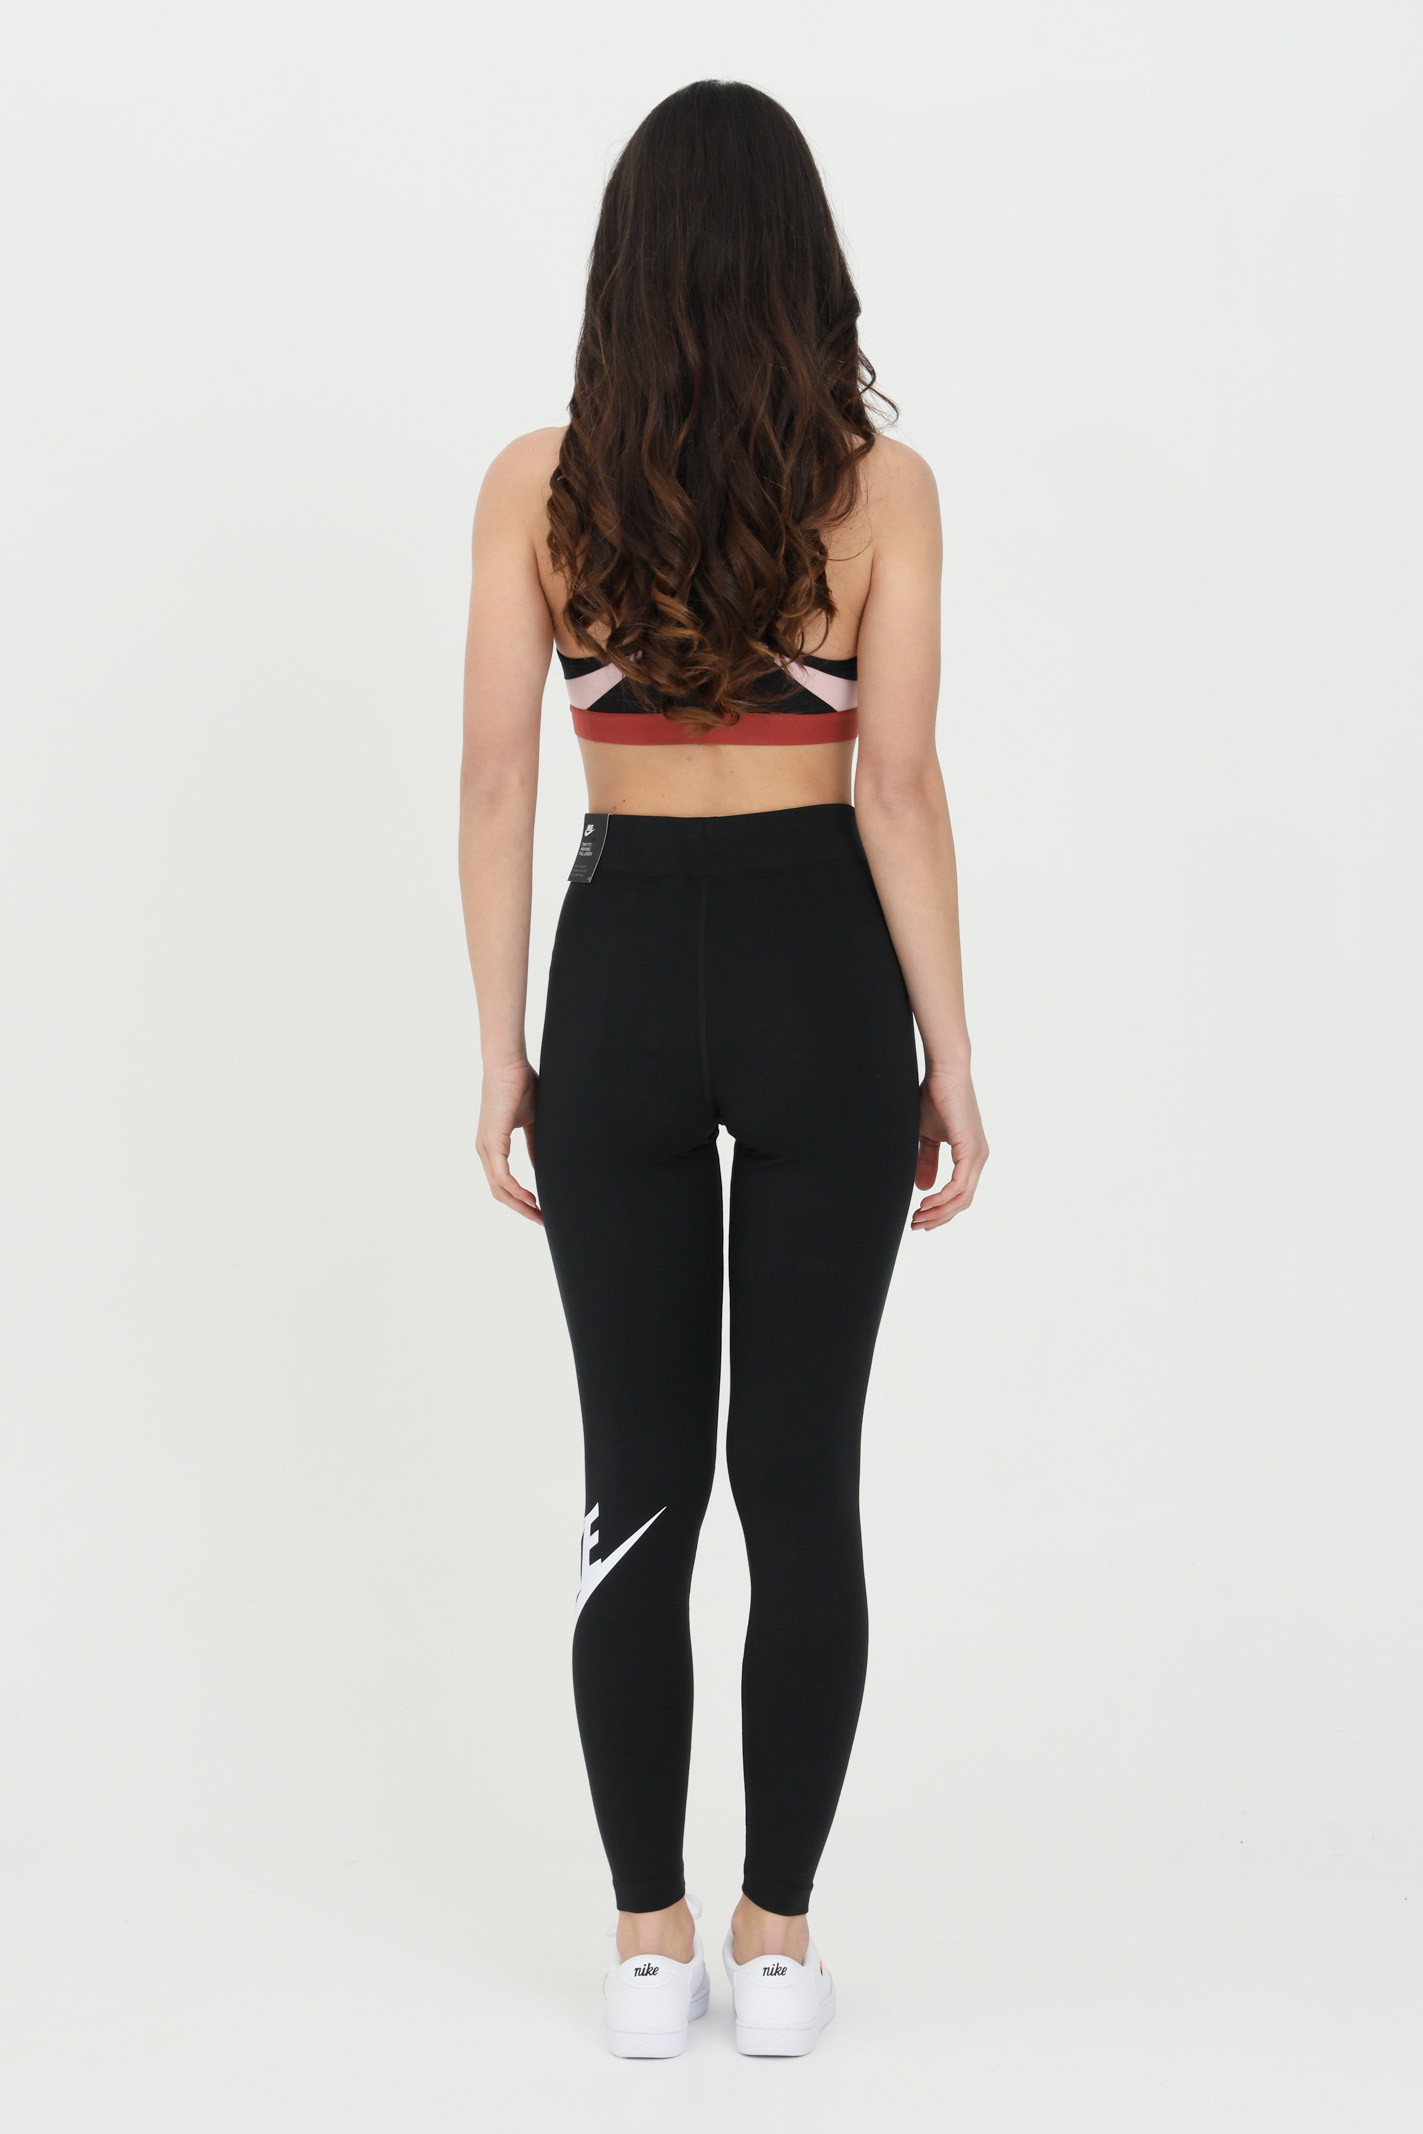 Black women's leggings with logo print - NIKE - Pavidas